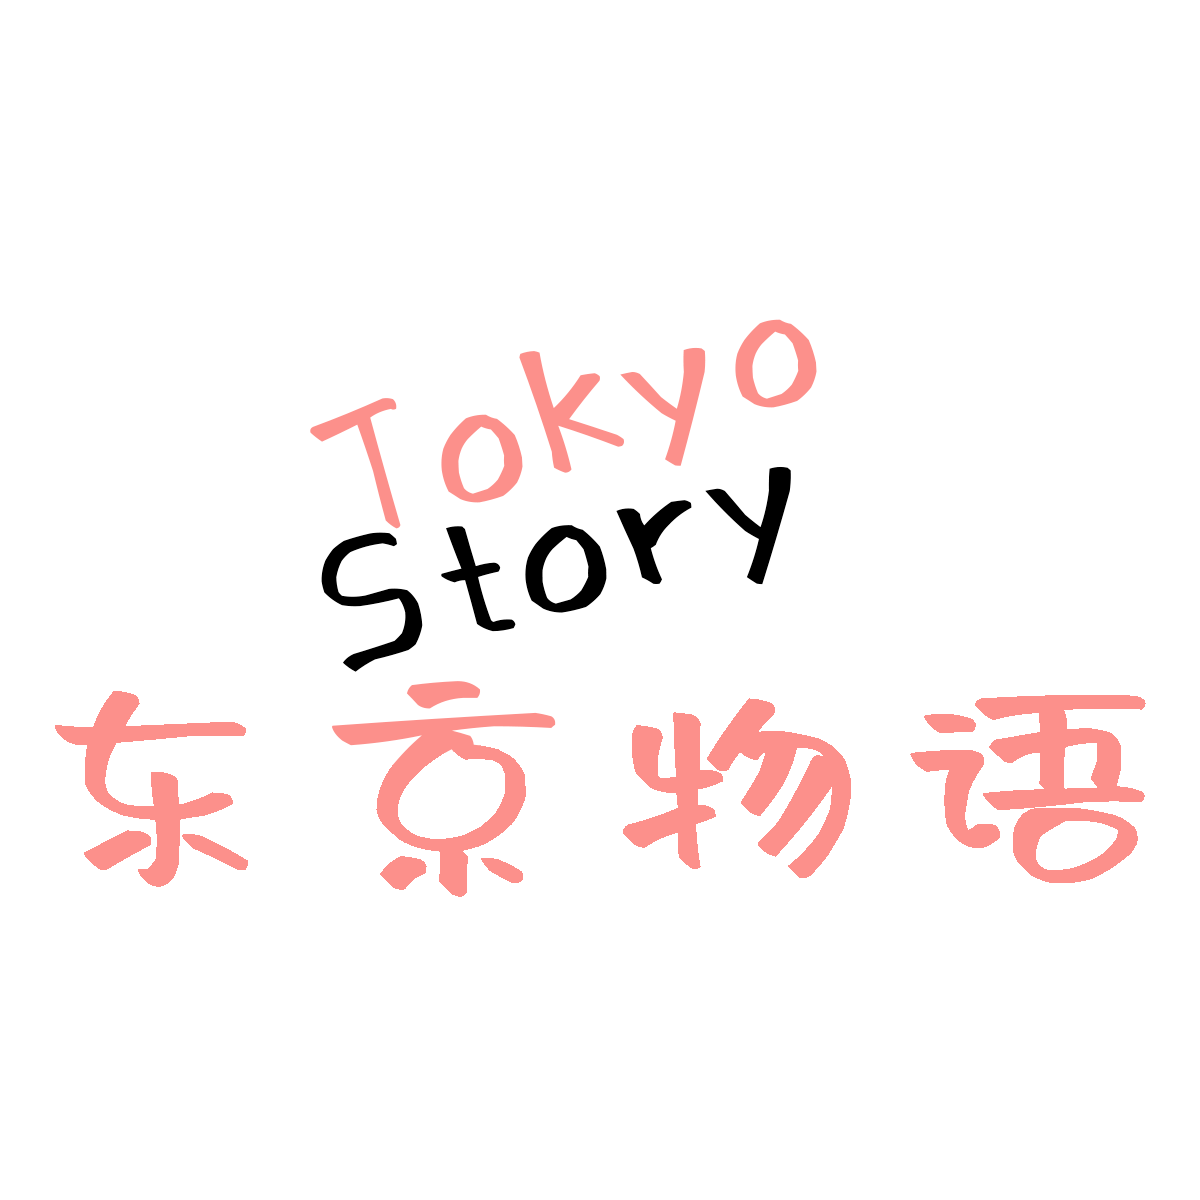 天津TokyoStory东京物语